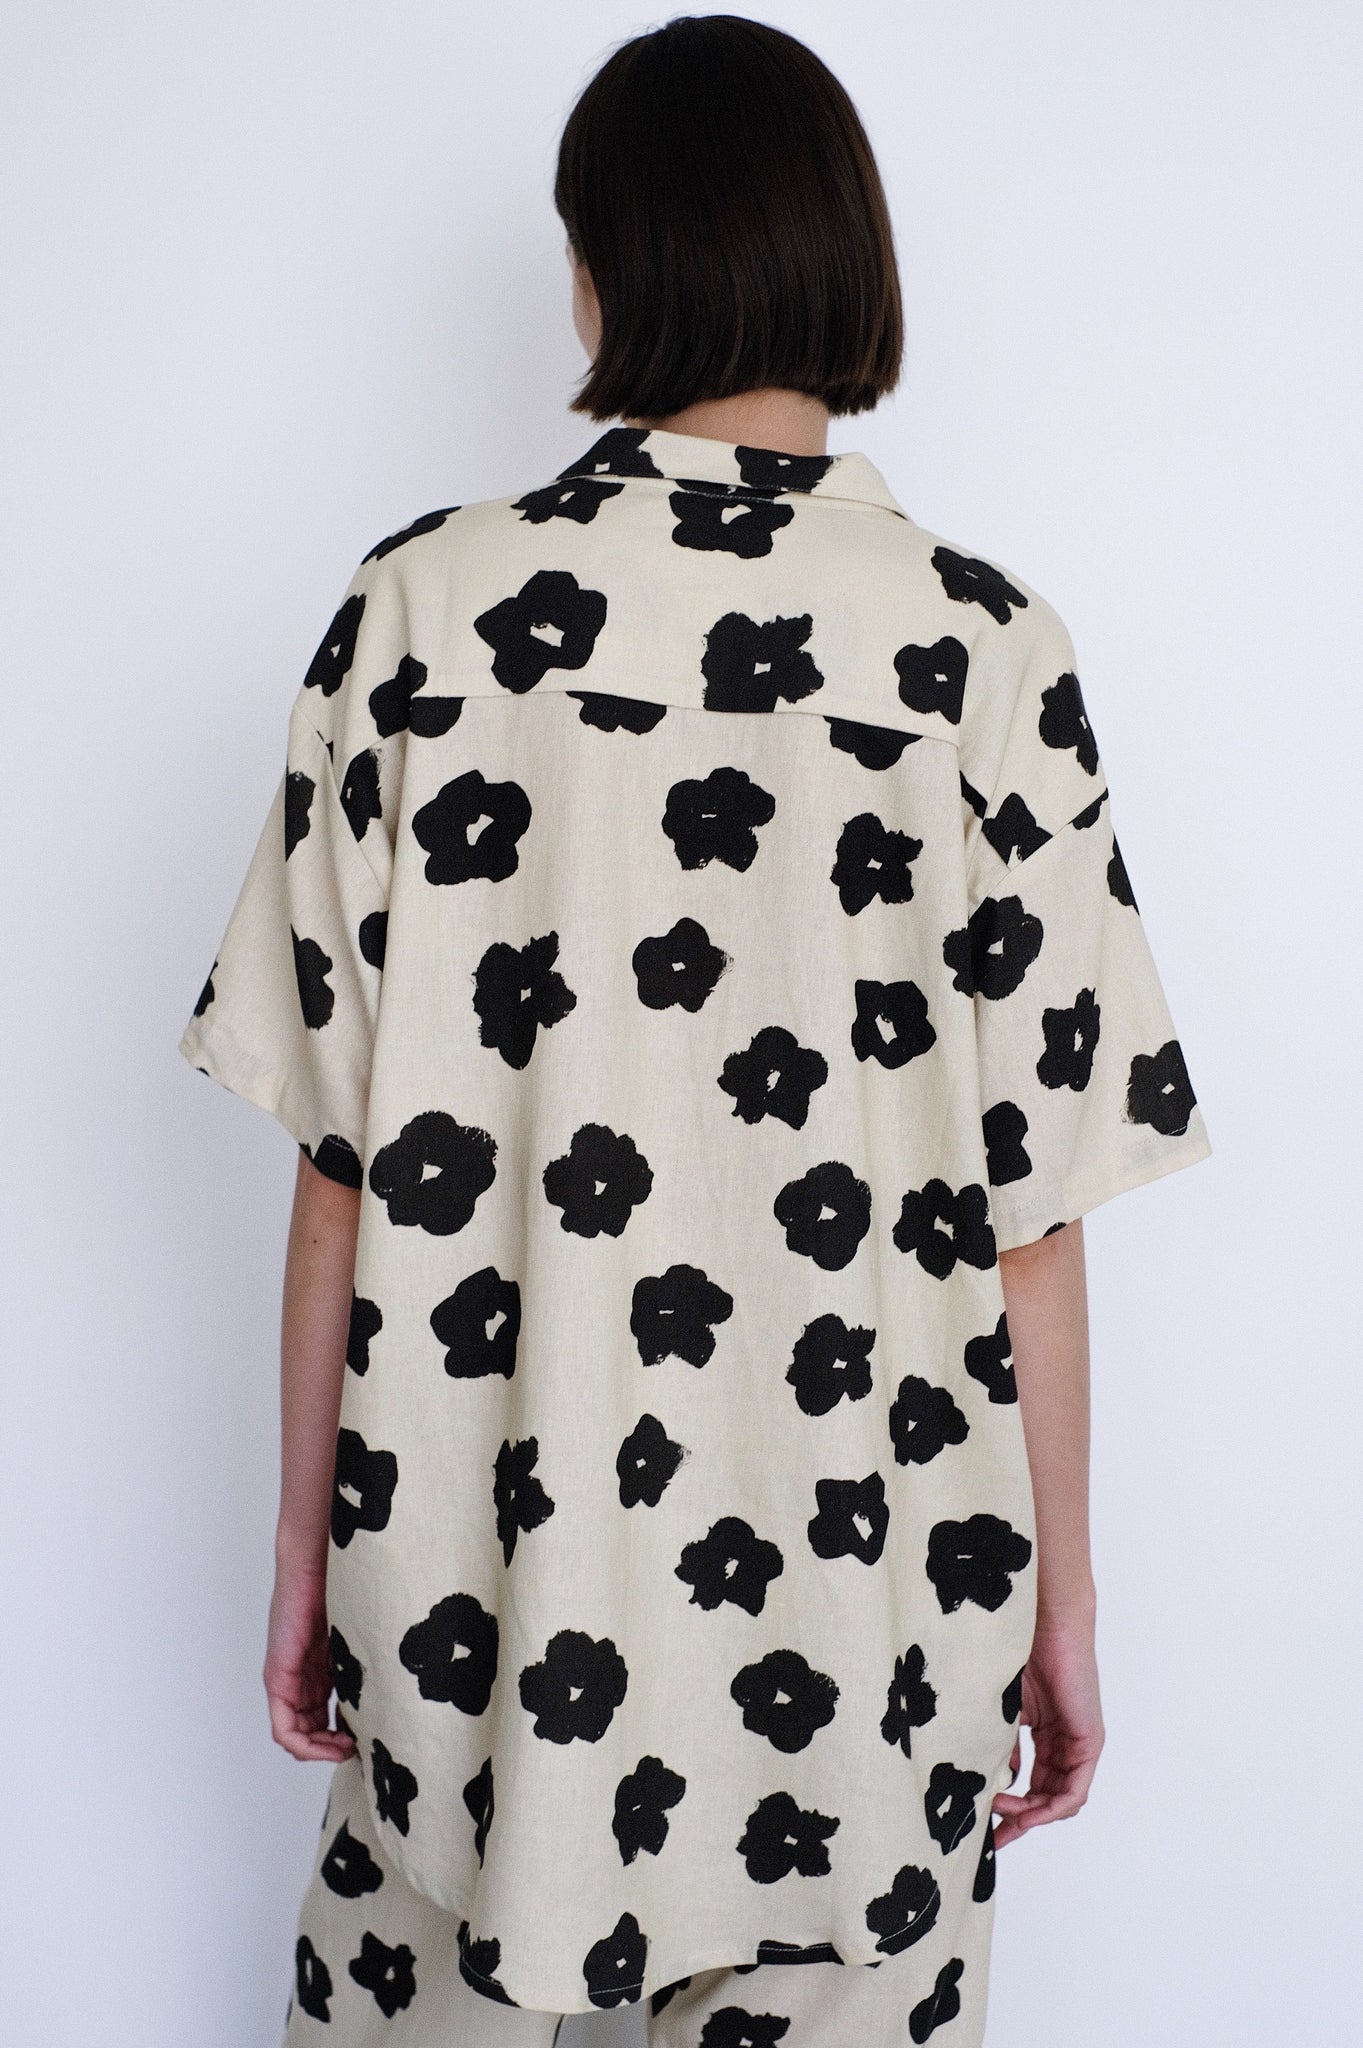 Rita Row Short Sleeve Barbra Shirt in Black and Cream Floral 